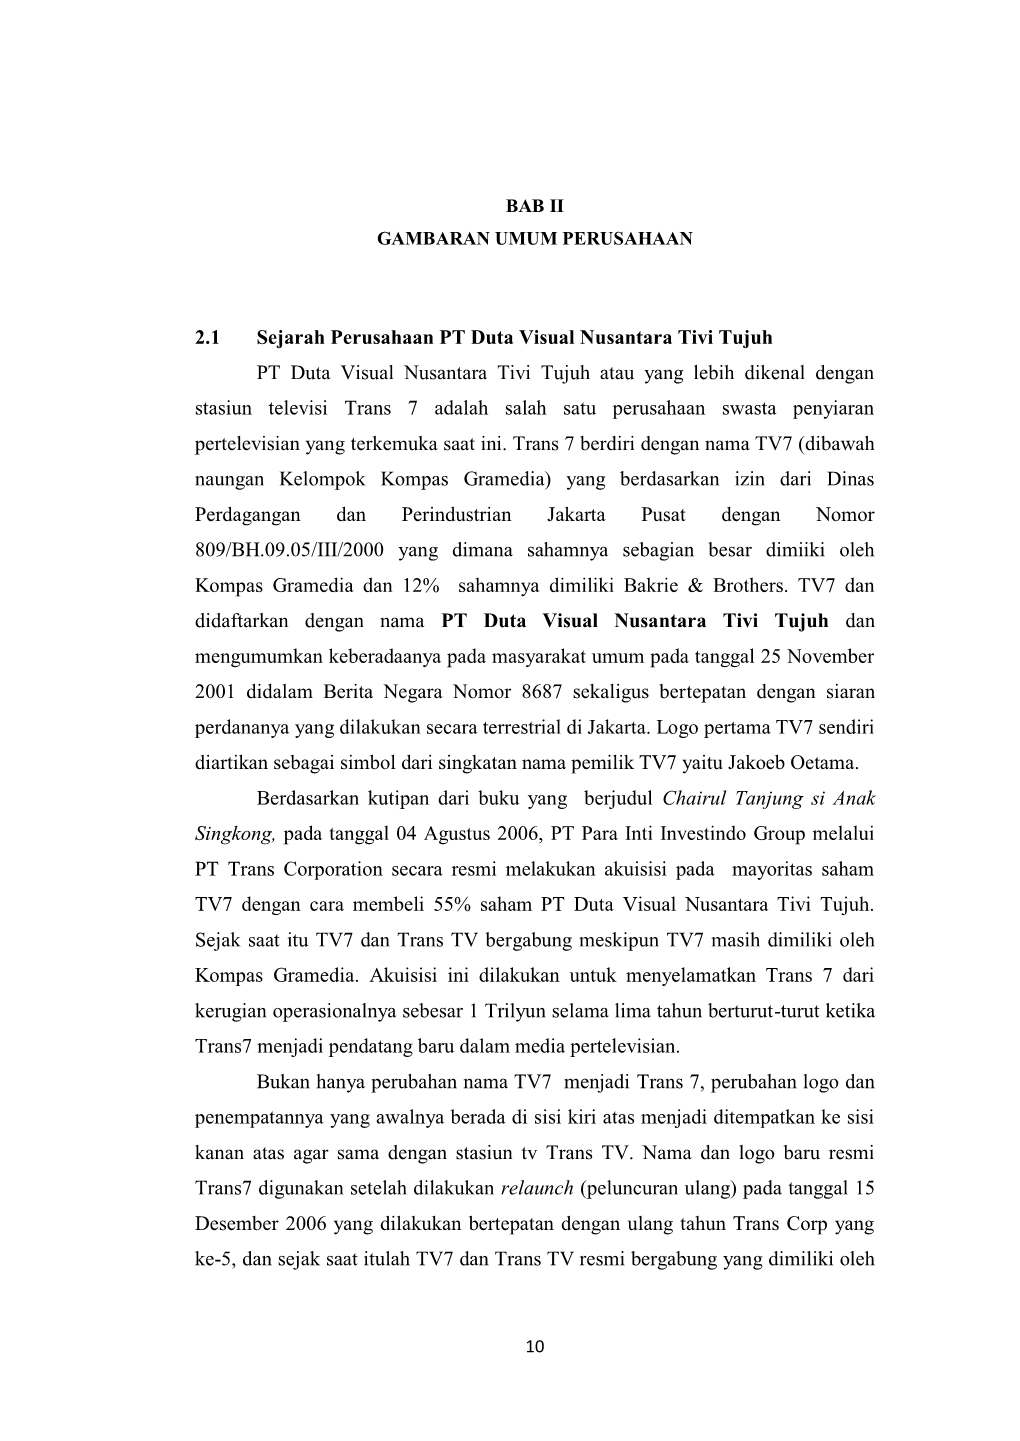 2.1 Sejarah Perusahaan PT Duta Visual Nusantara Tivi Tujuh